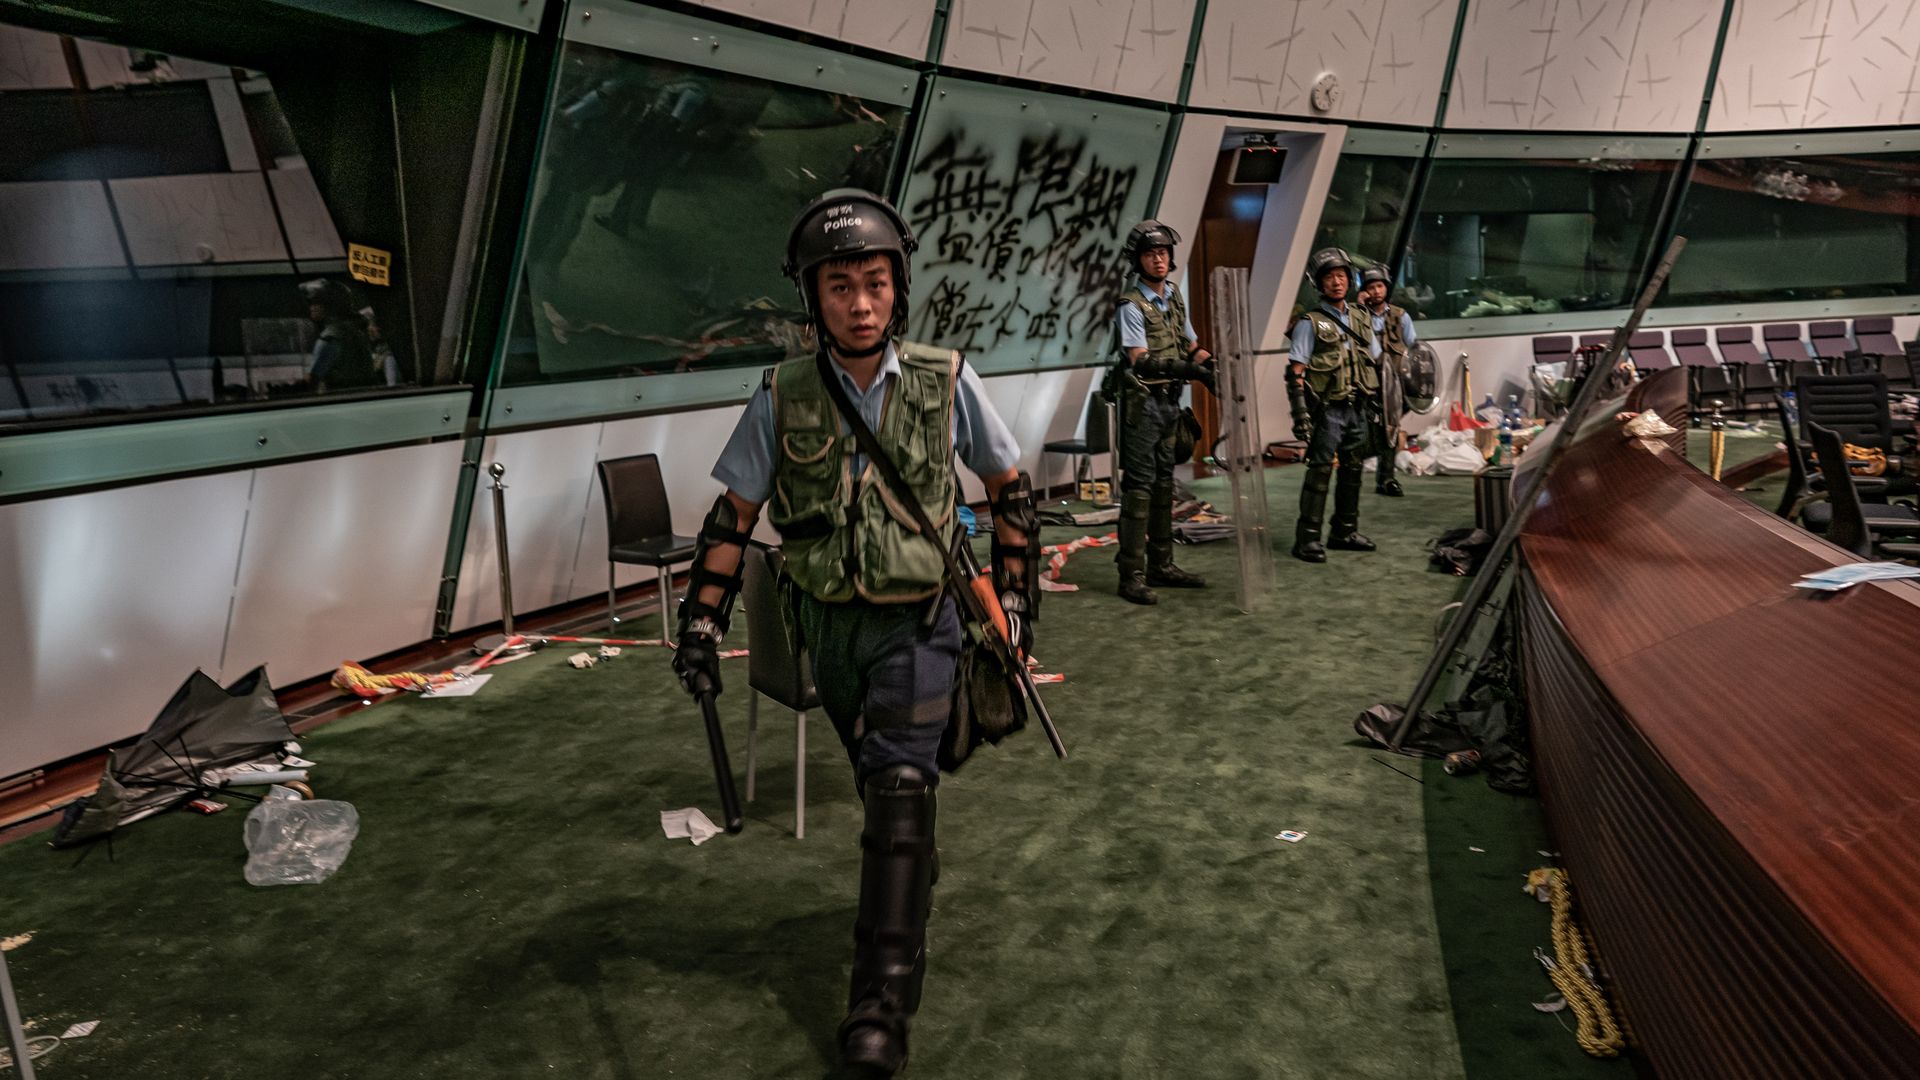 Riot police patrol inside the Legislative Council building.